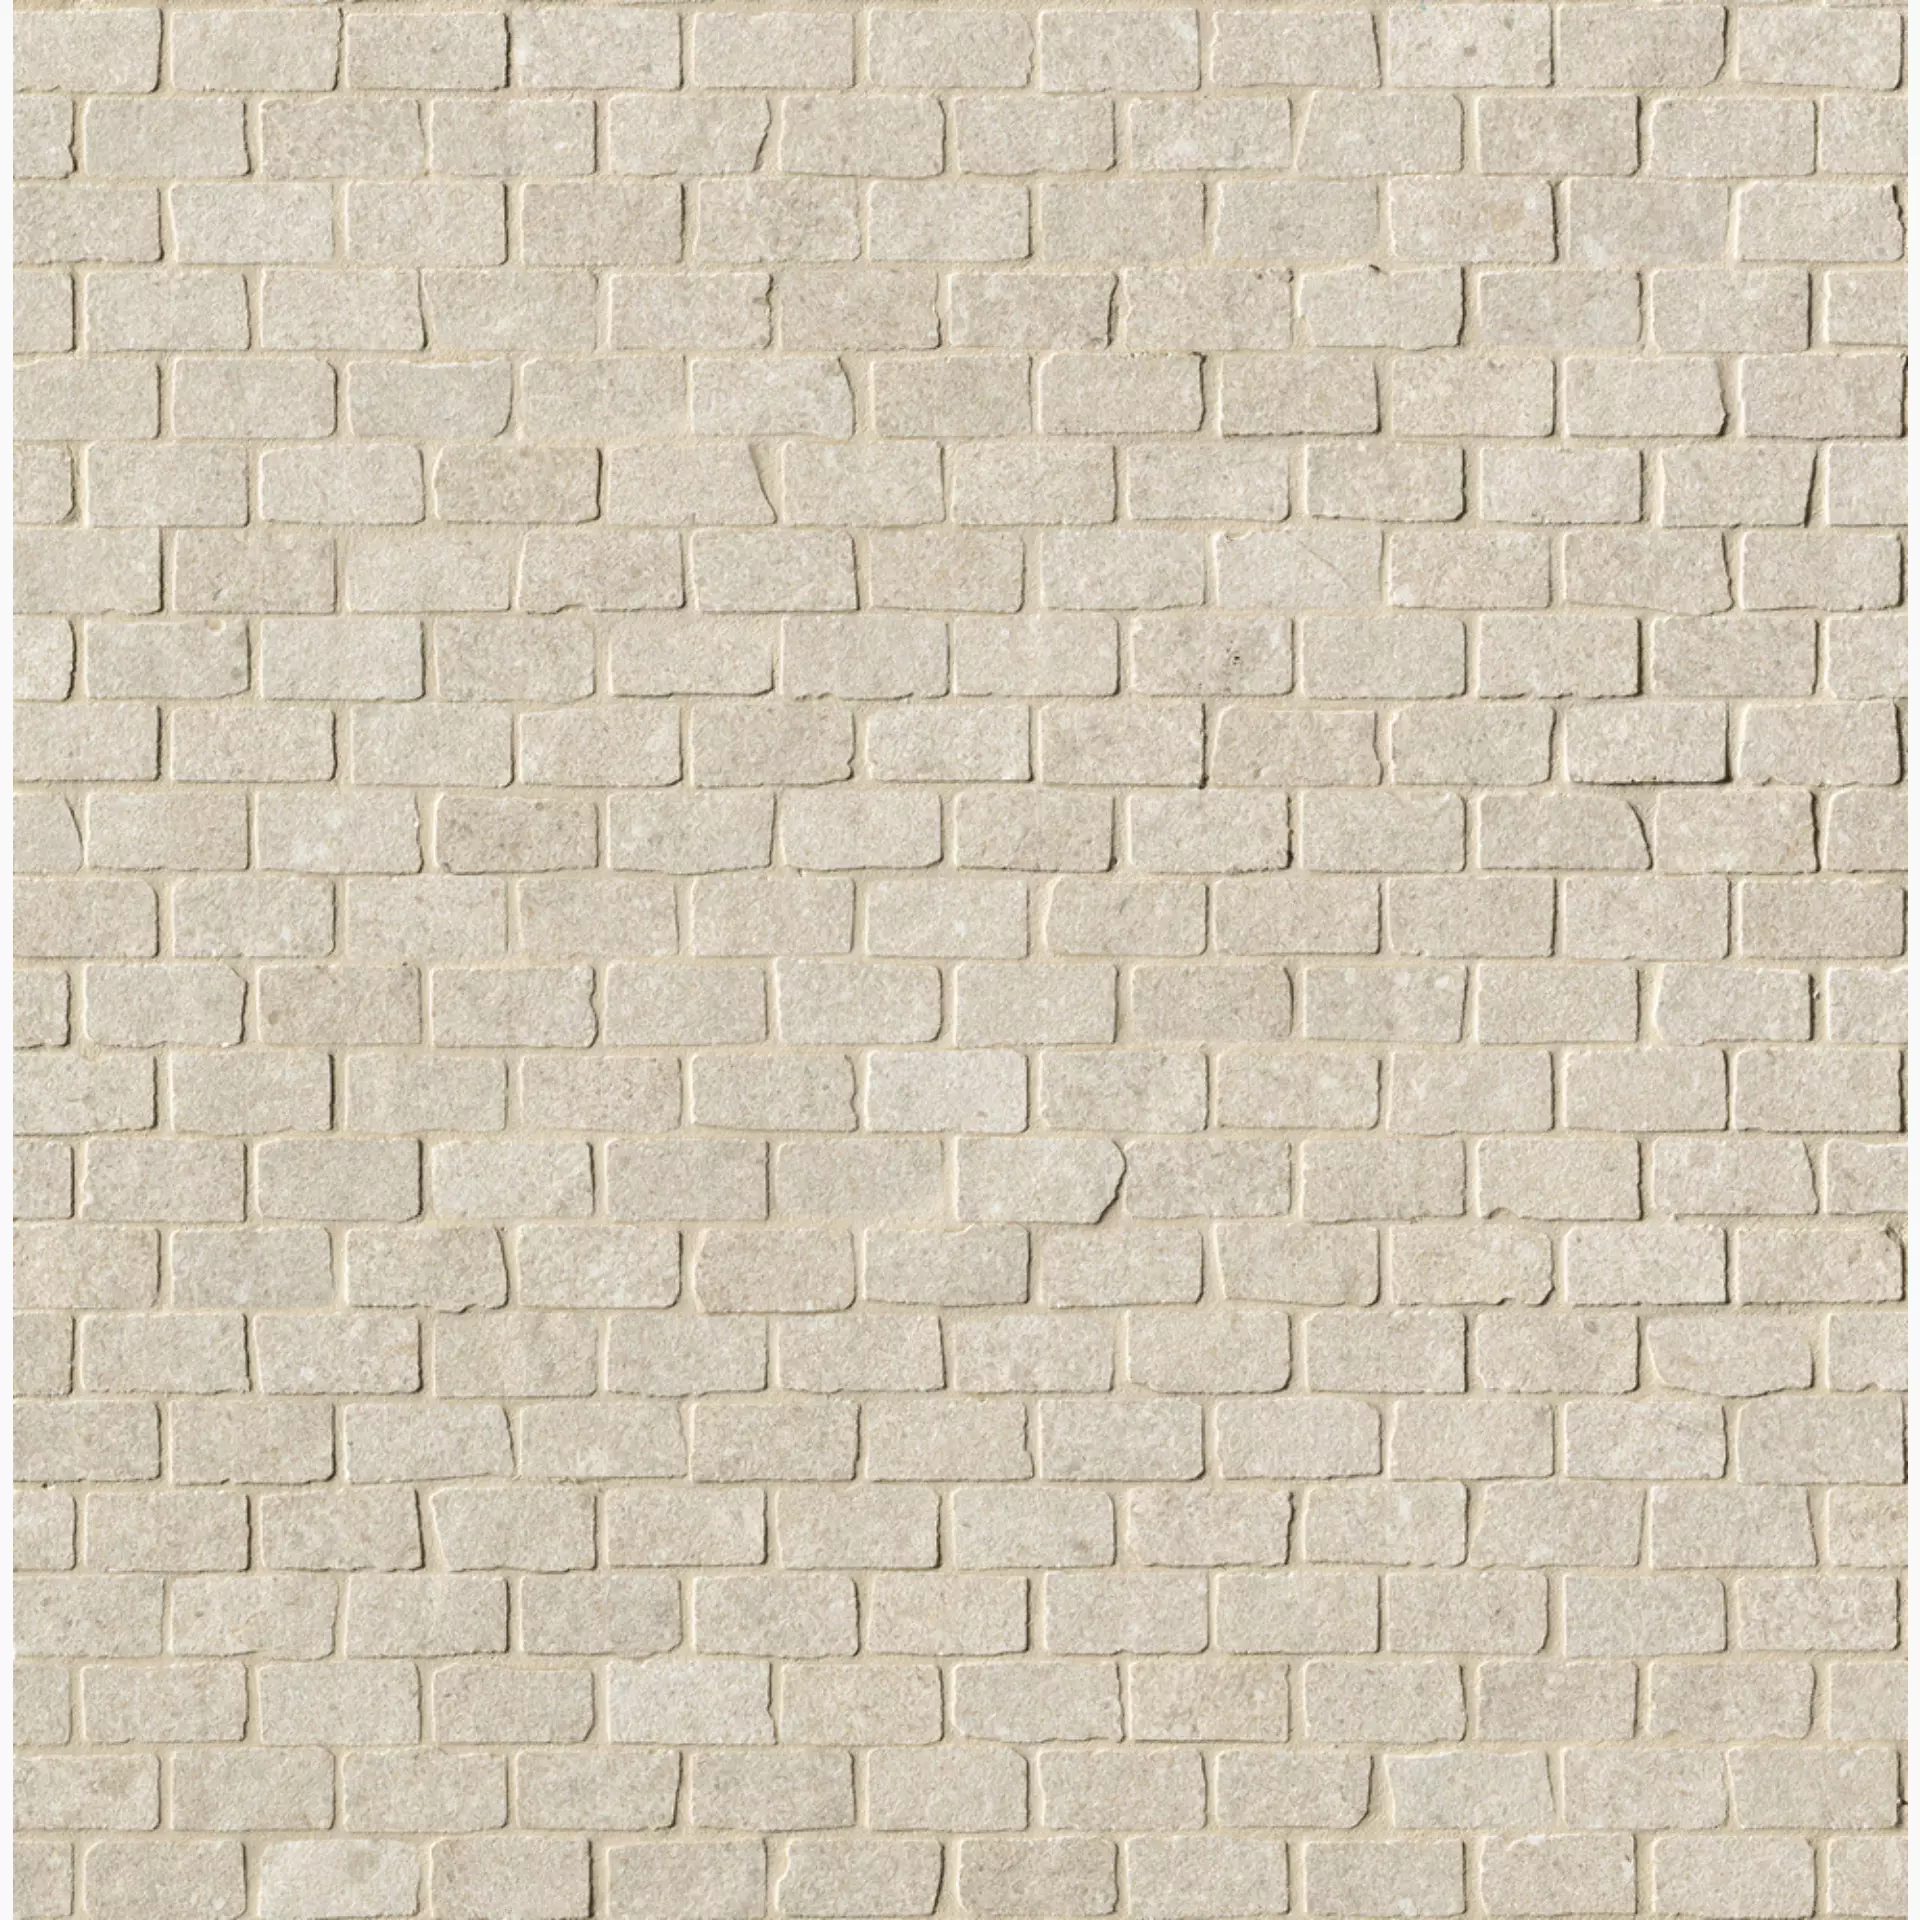 FAP Nux Beige Anticato Beige fORZ antiquiert 30,5x30,5cm Mosaik Brick